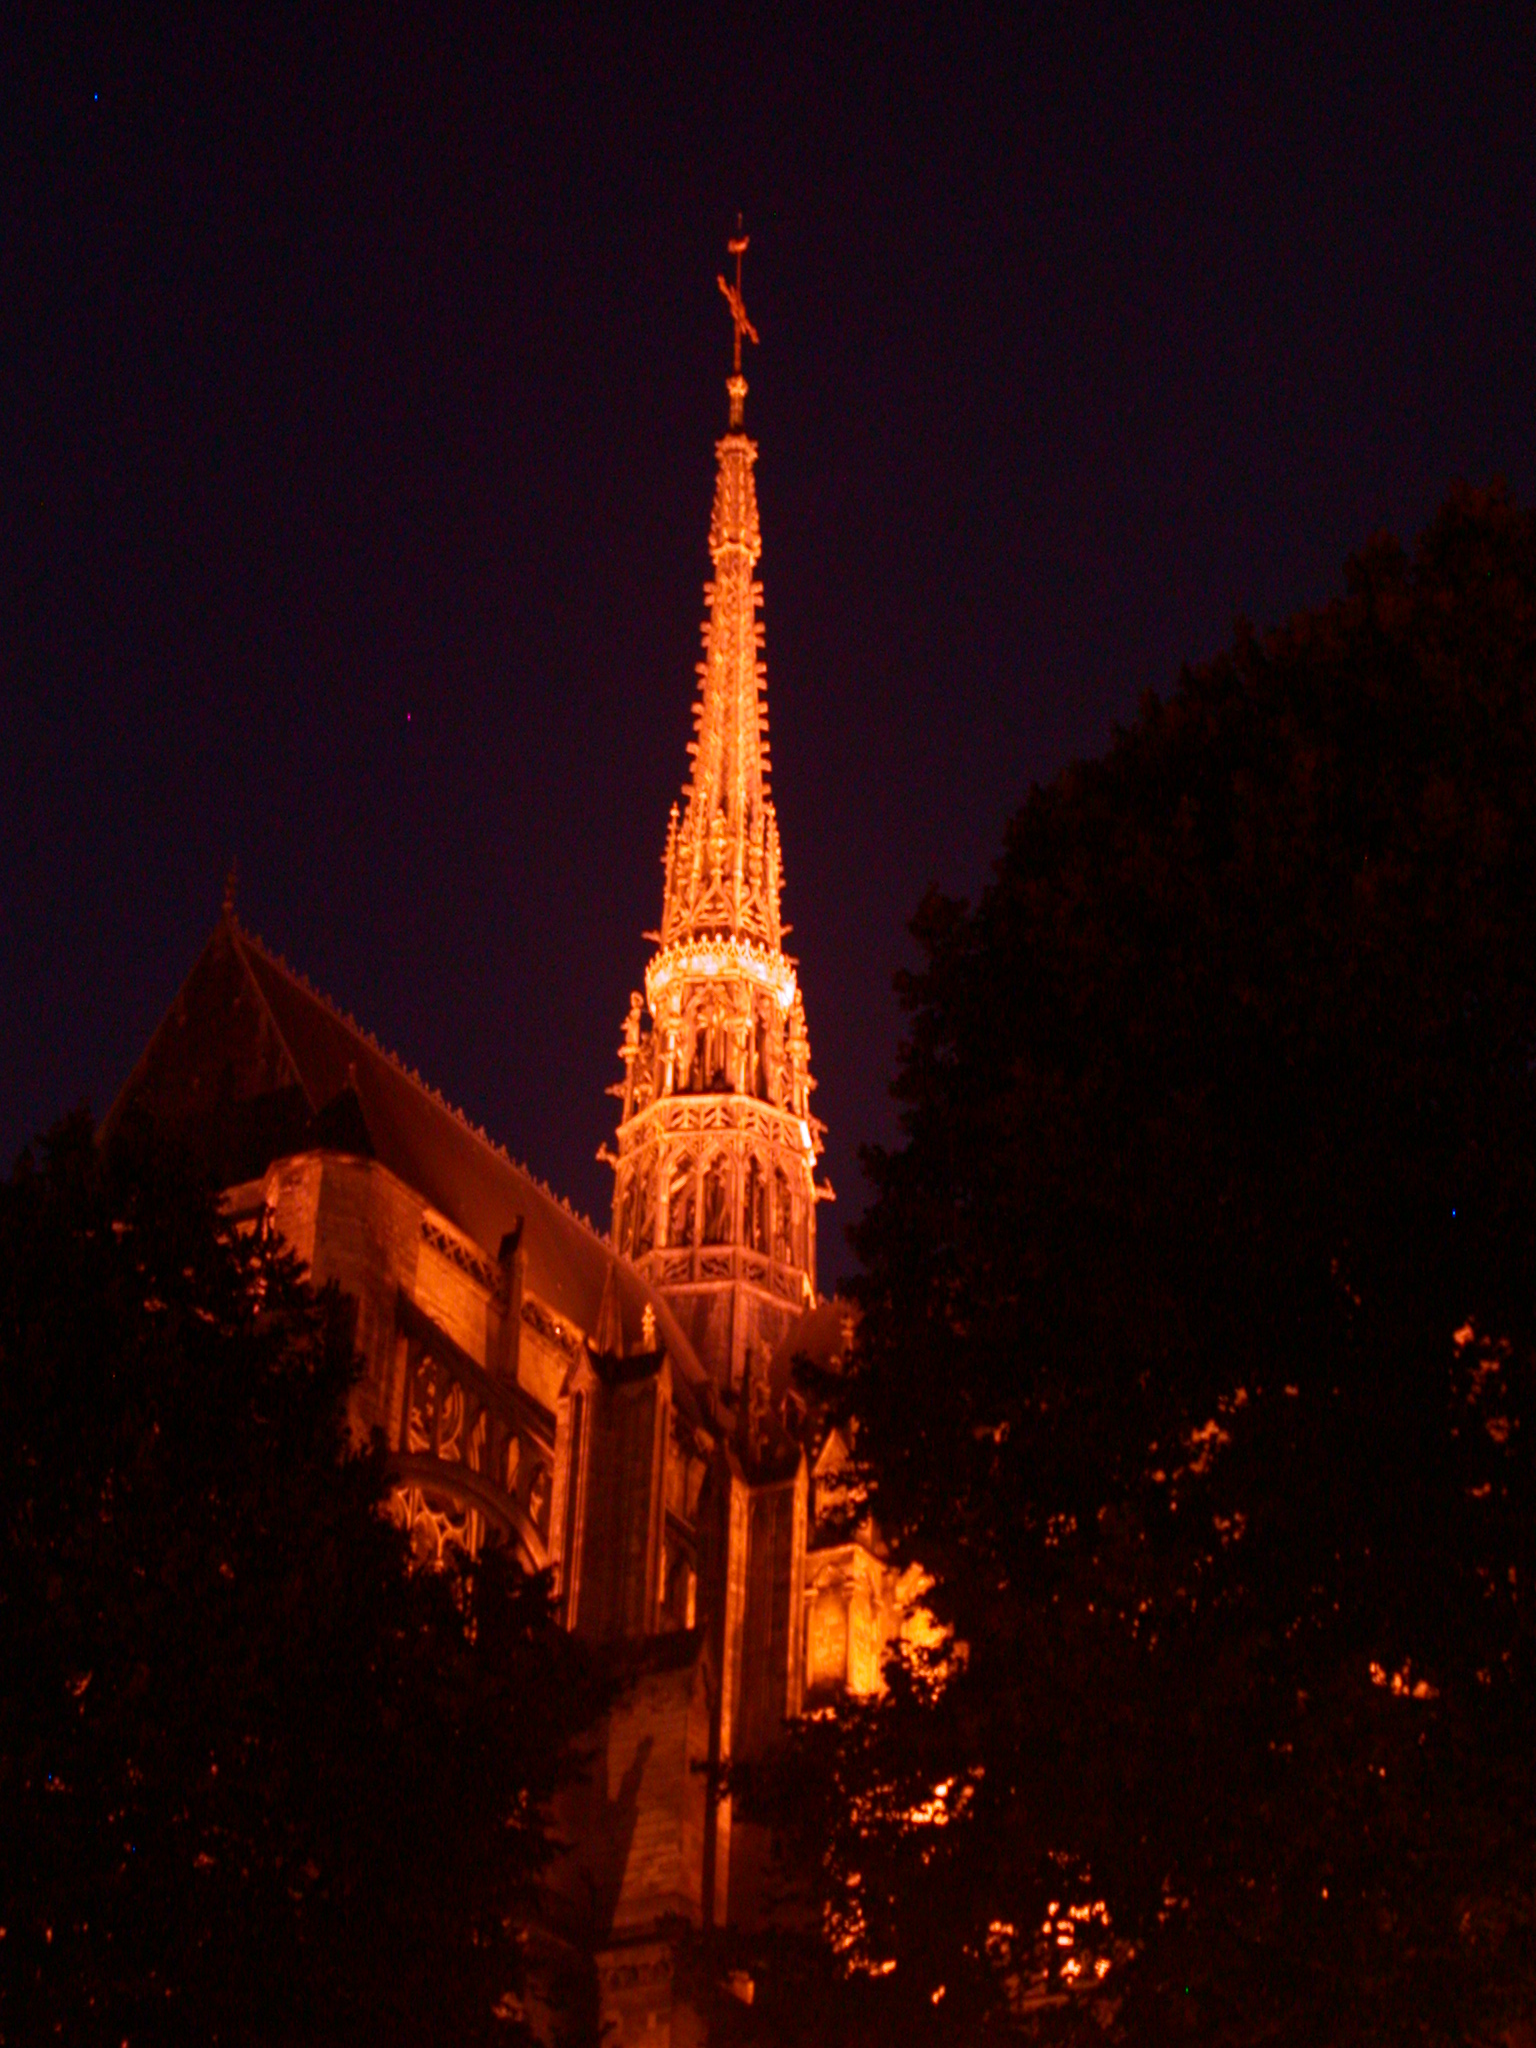 church spire golden higlight light up night dark warm